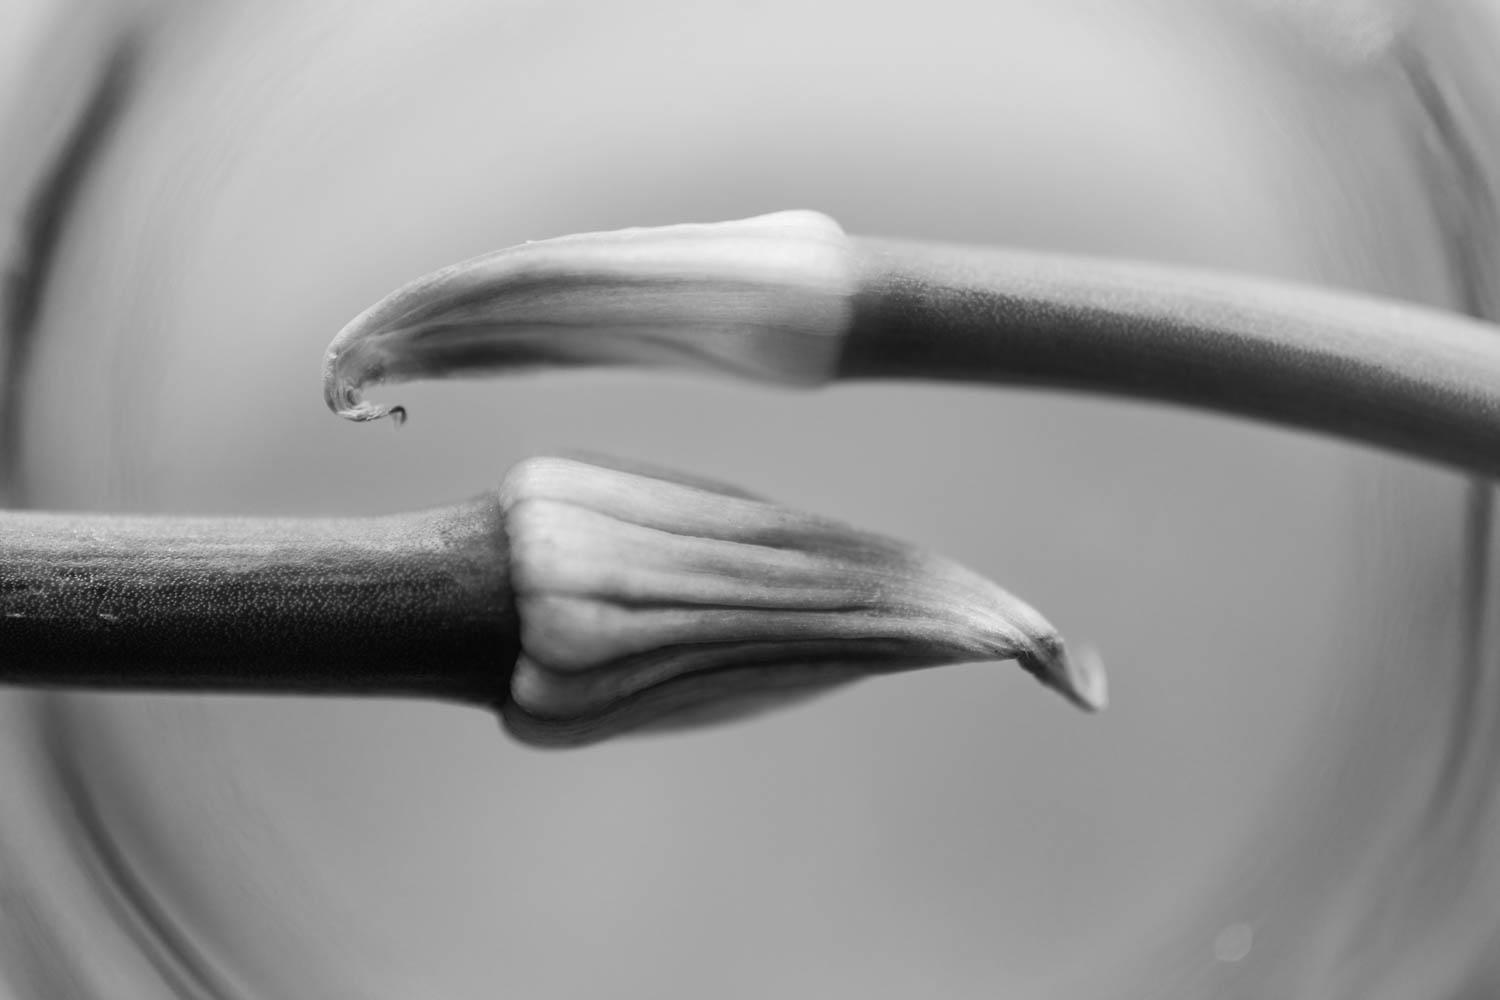 Monochrome photographs of spring onion flowers